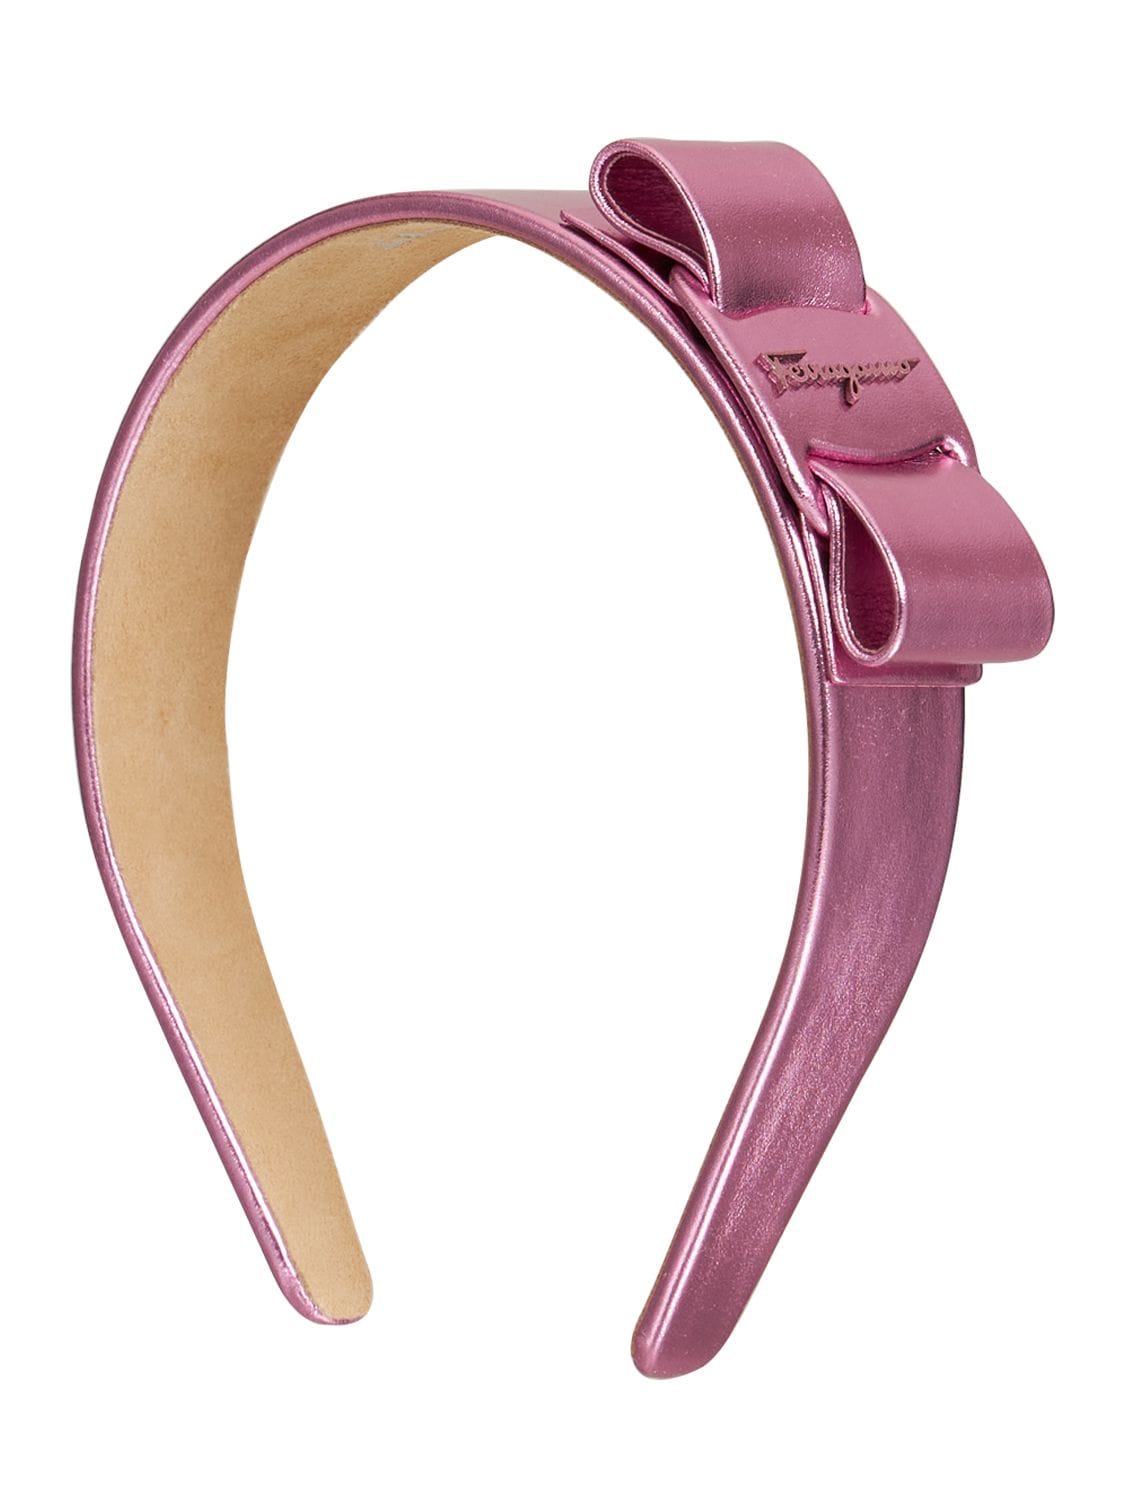 Ferragamo Vara Bow Leather Headband In Pink Iridescent